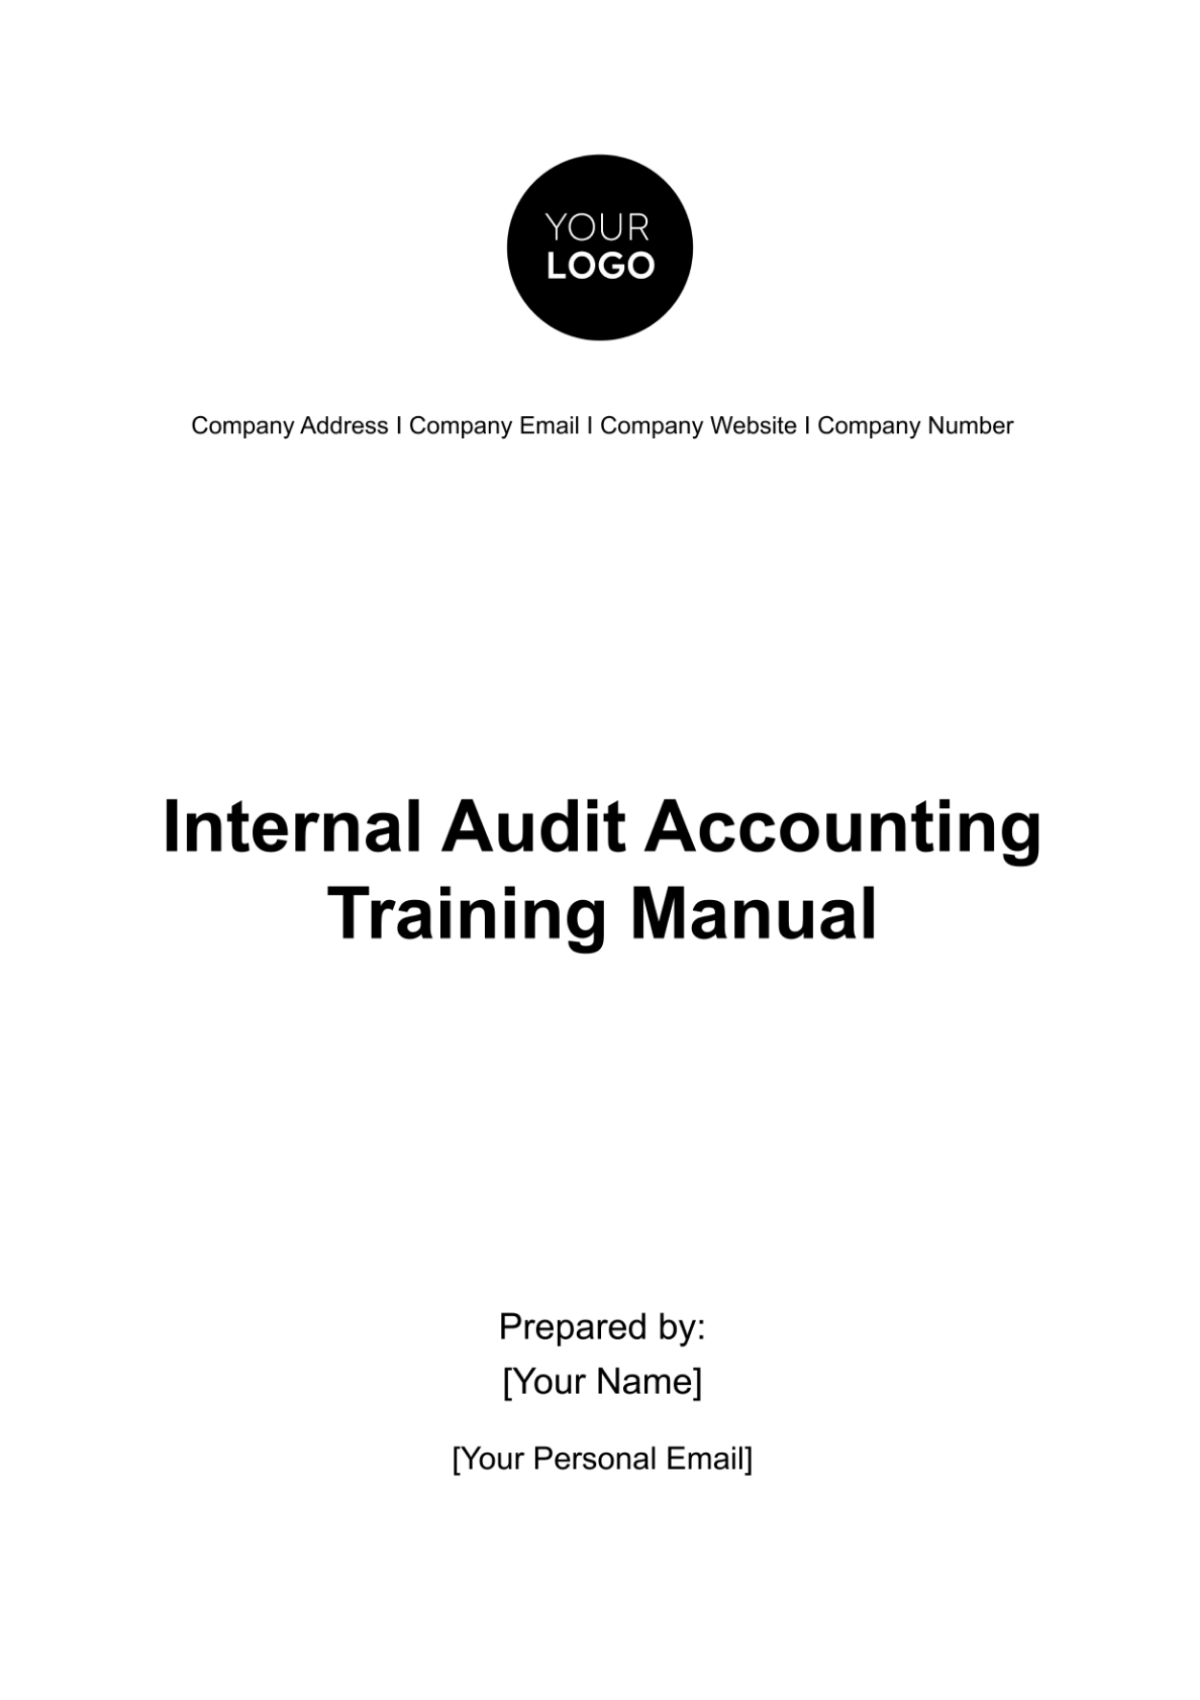 Internal Audit Accounting Training Manual Template